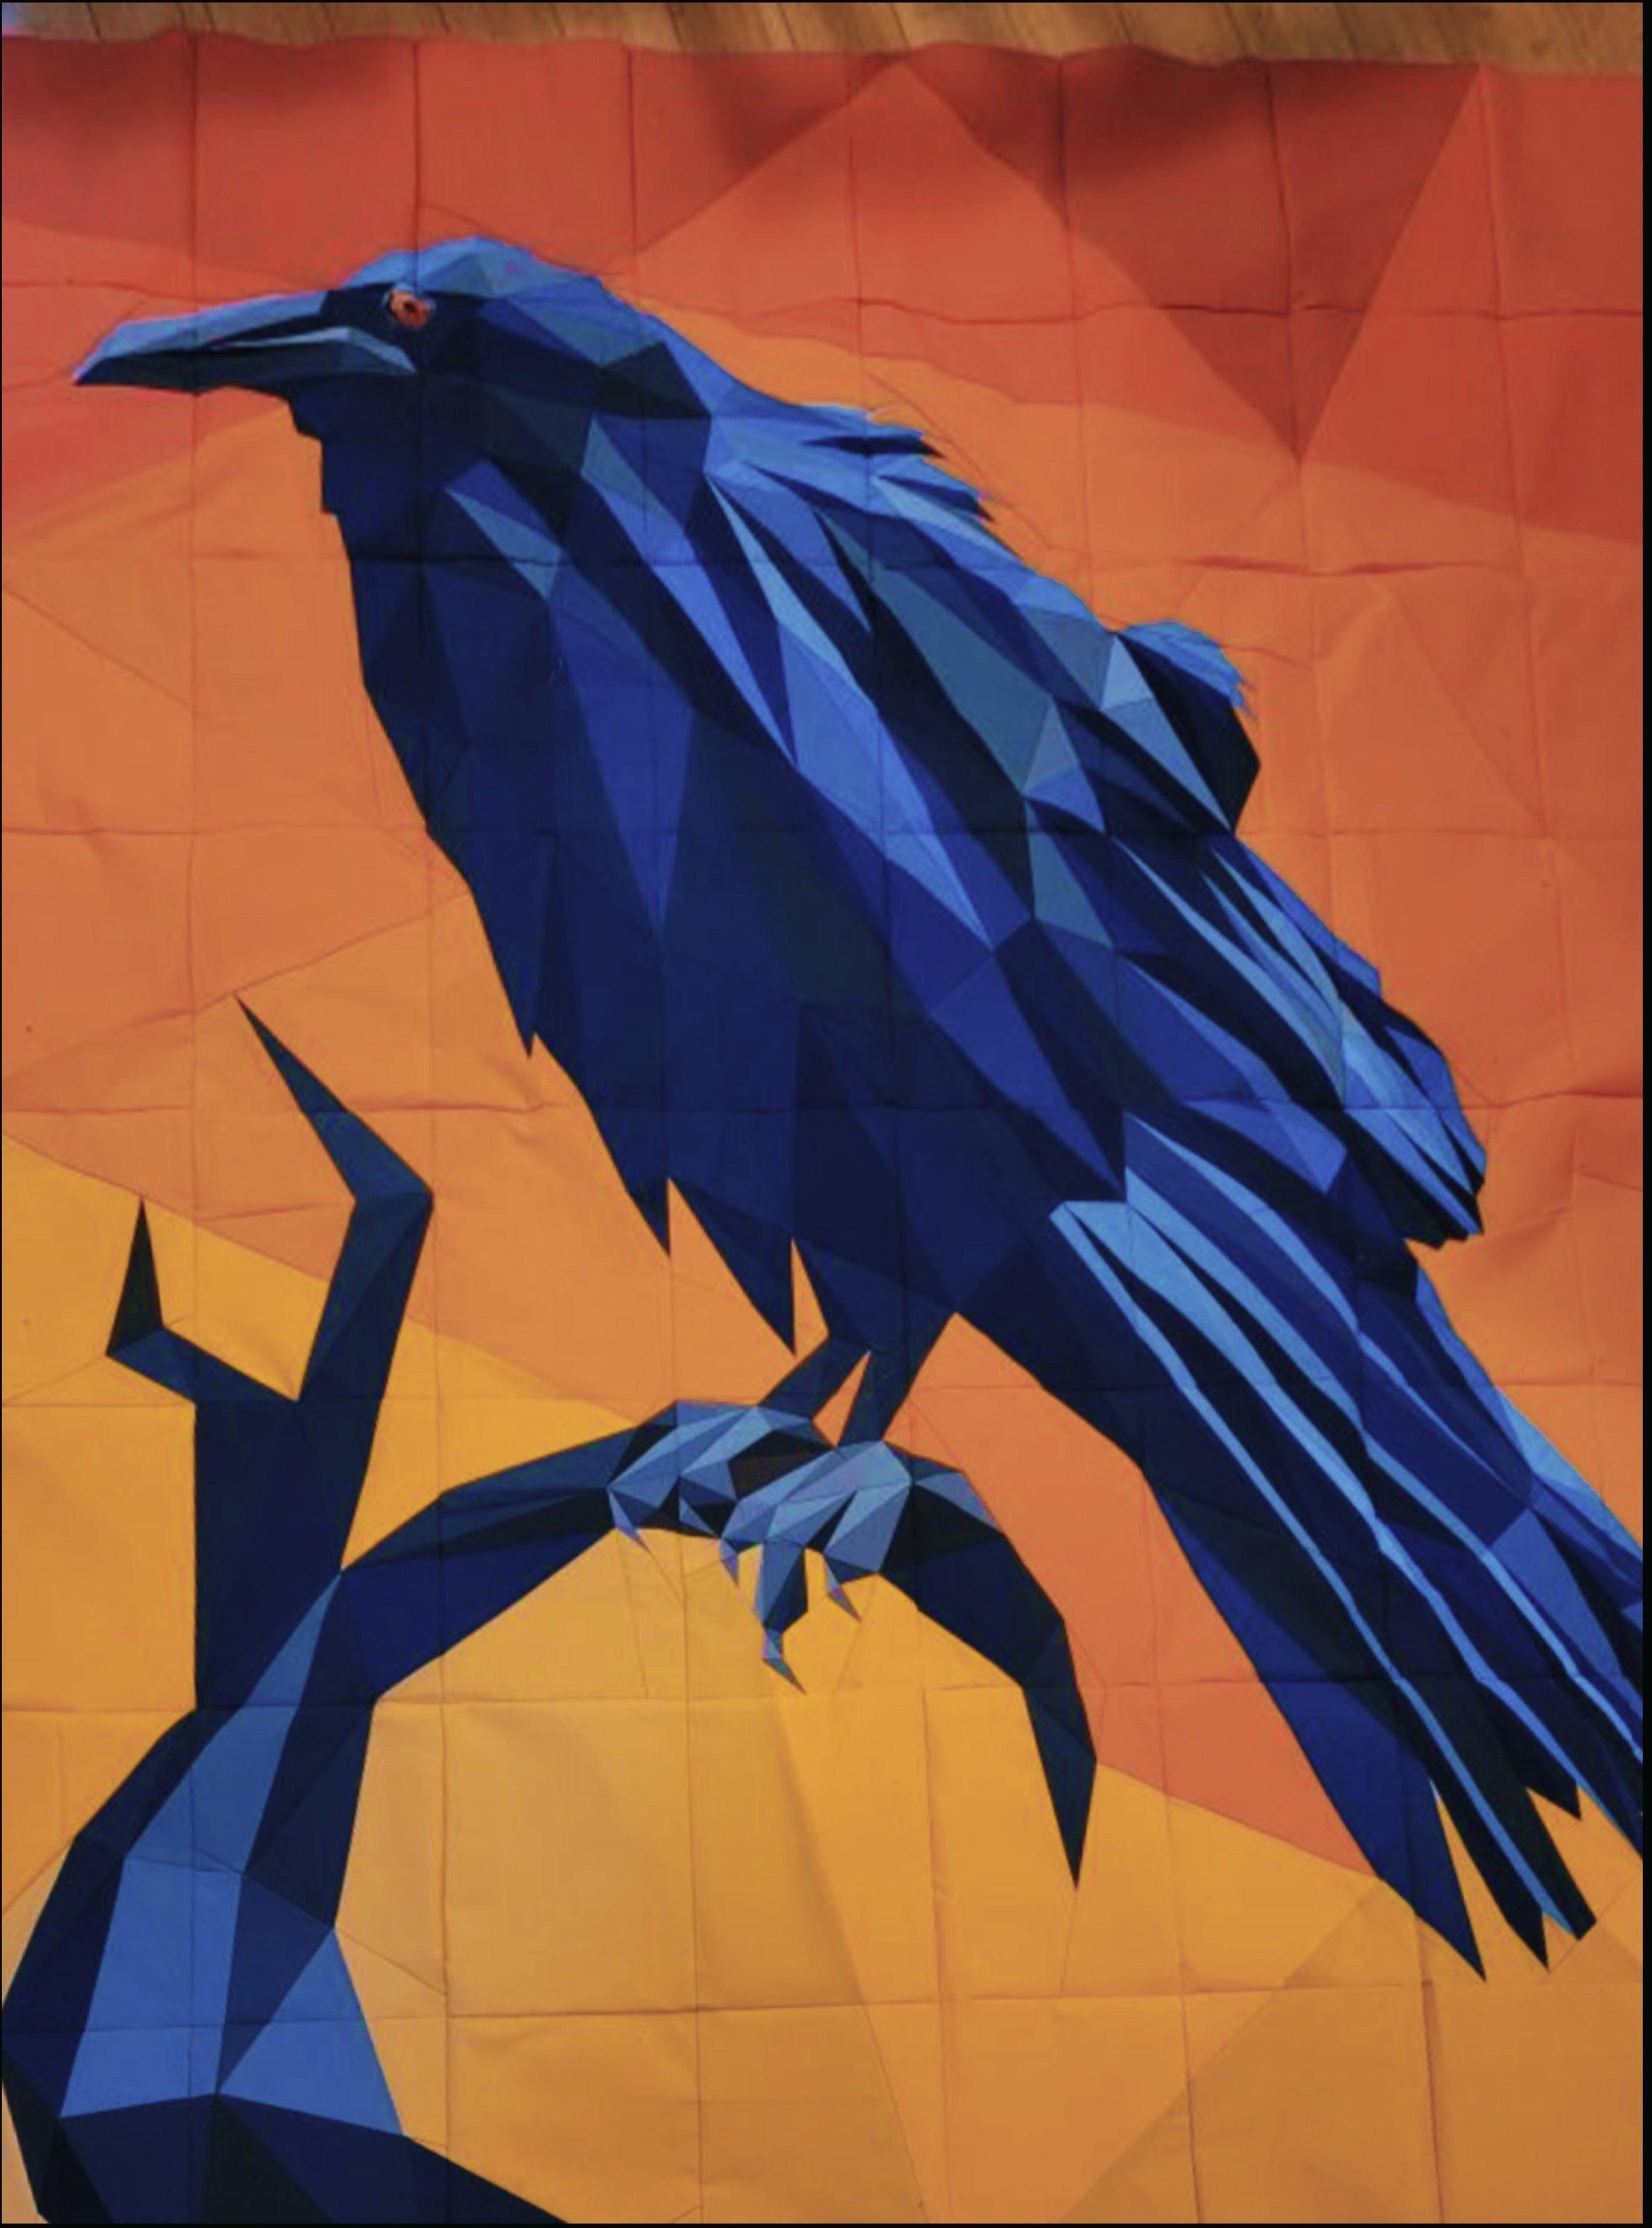 Edgar the Raven Pattern-Legit Kits-My Favorite Quilt Store